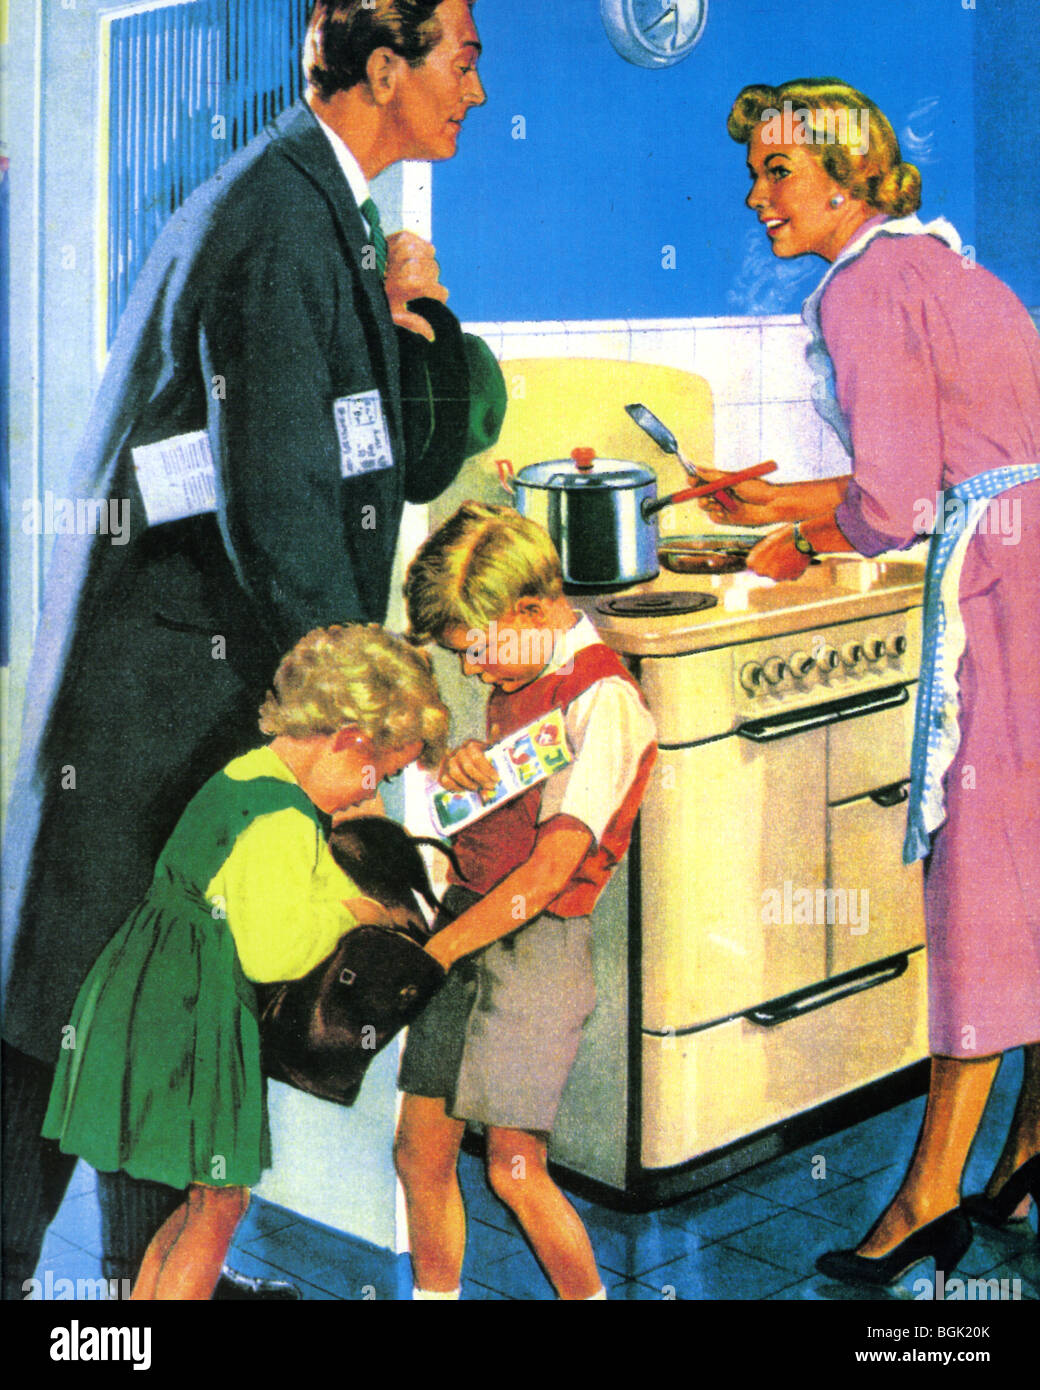 Мама приехала молодую. Norman Rockwell художник домохозяйка. Американская семья 50-х. Американская семья ретро. Ретро иллюстрации американская семья.